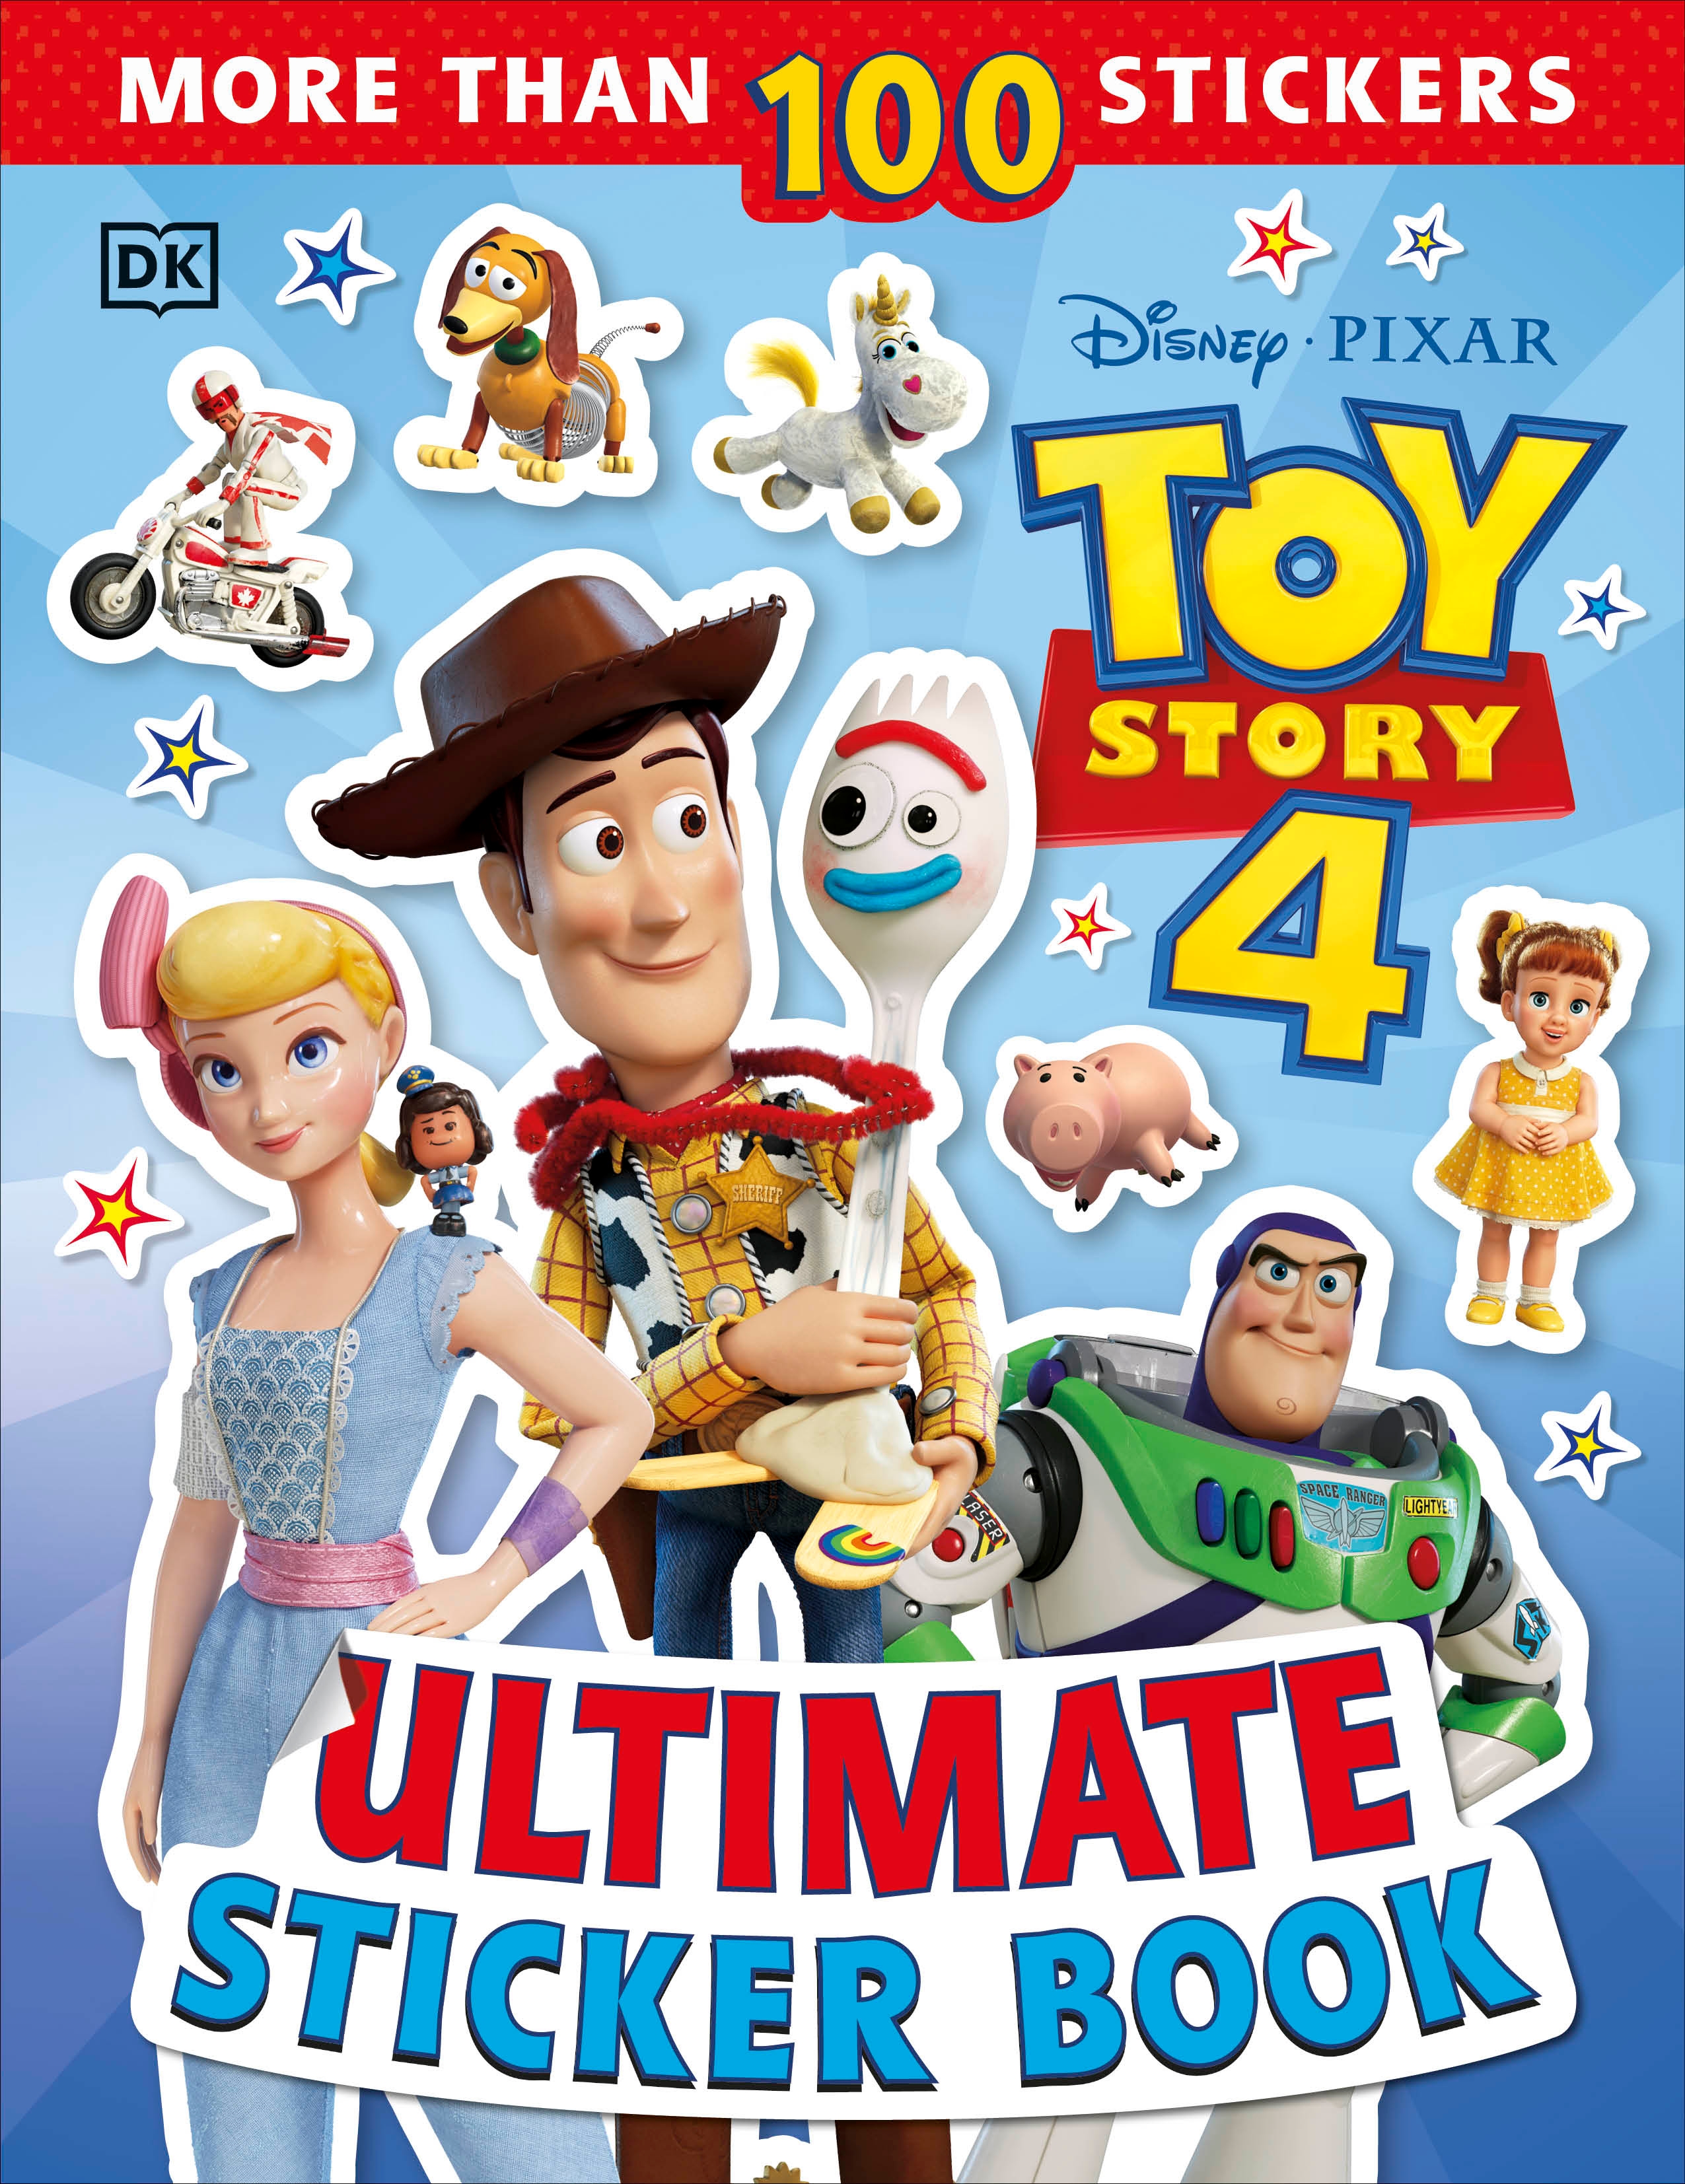 Disney Pixar Toy Story 4 Ultimate Sticker Book Penguin Books New Zealand